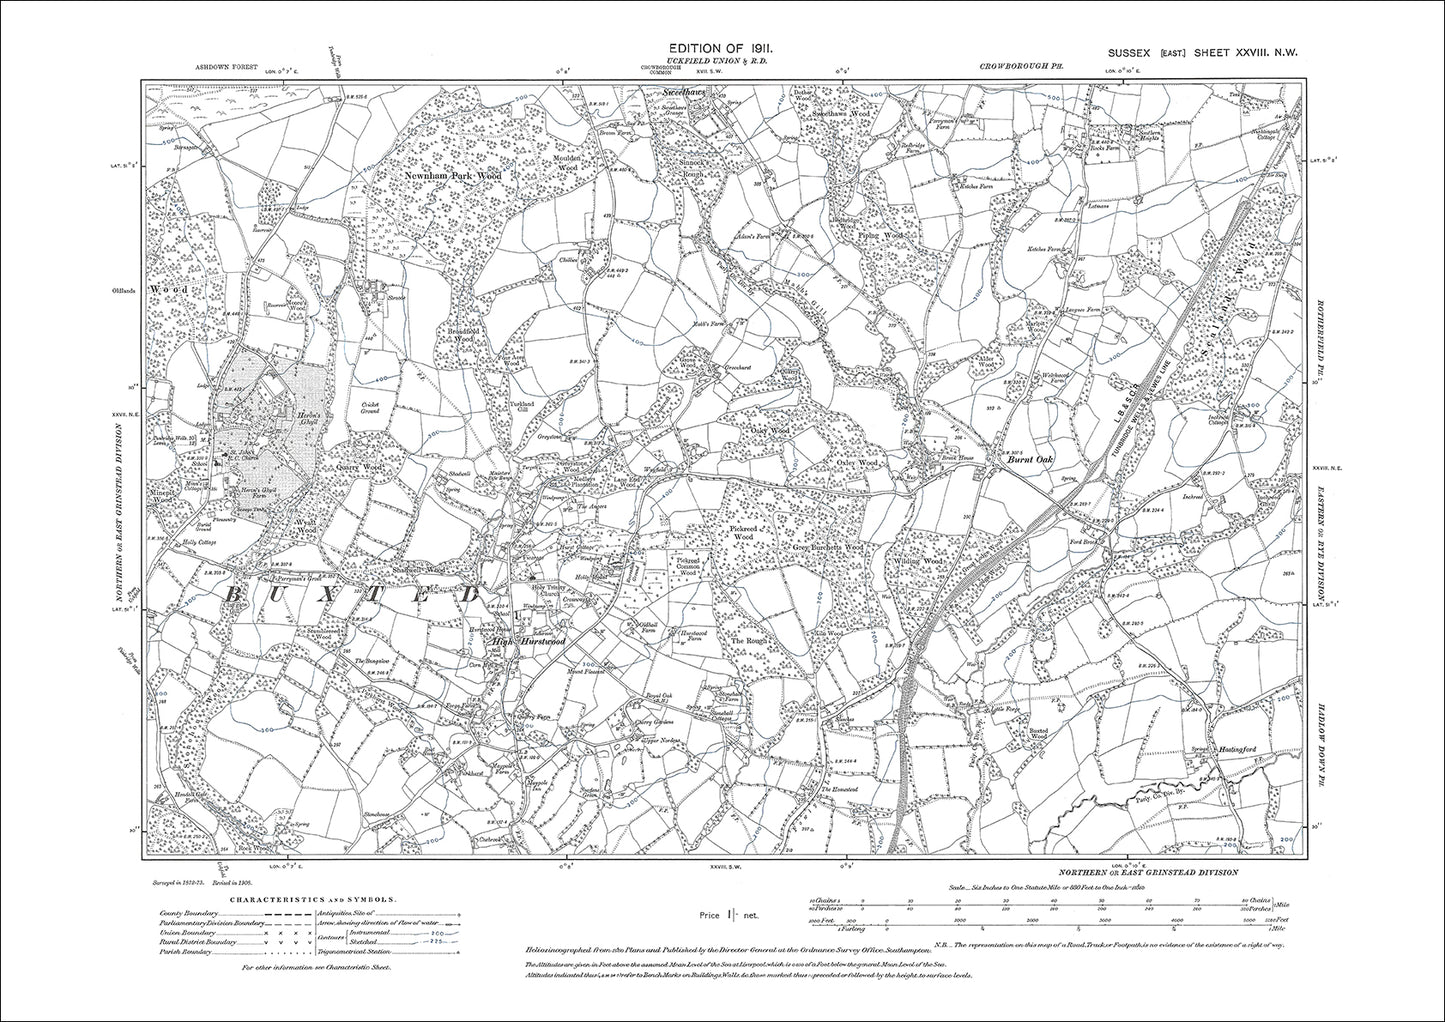 High Hurstwood, Burnt Oak, old map Sussex 1911: 28NW